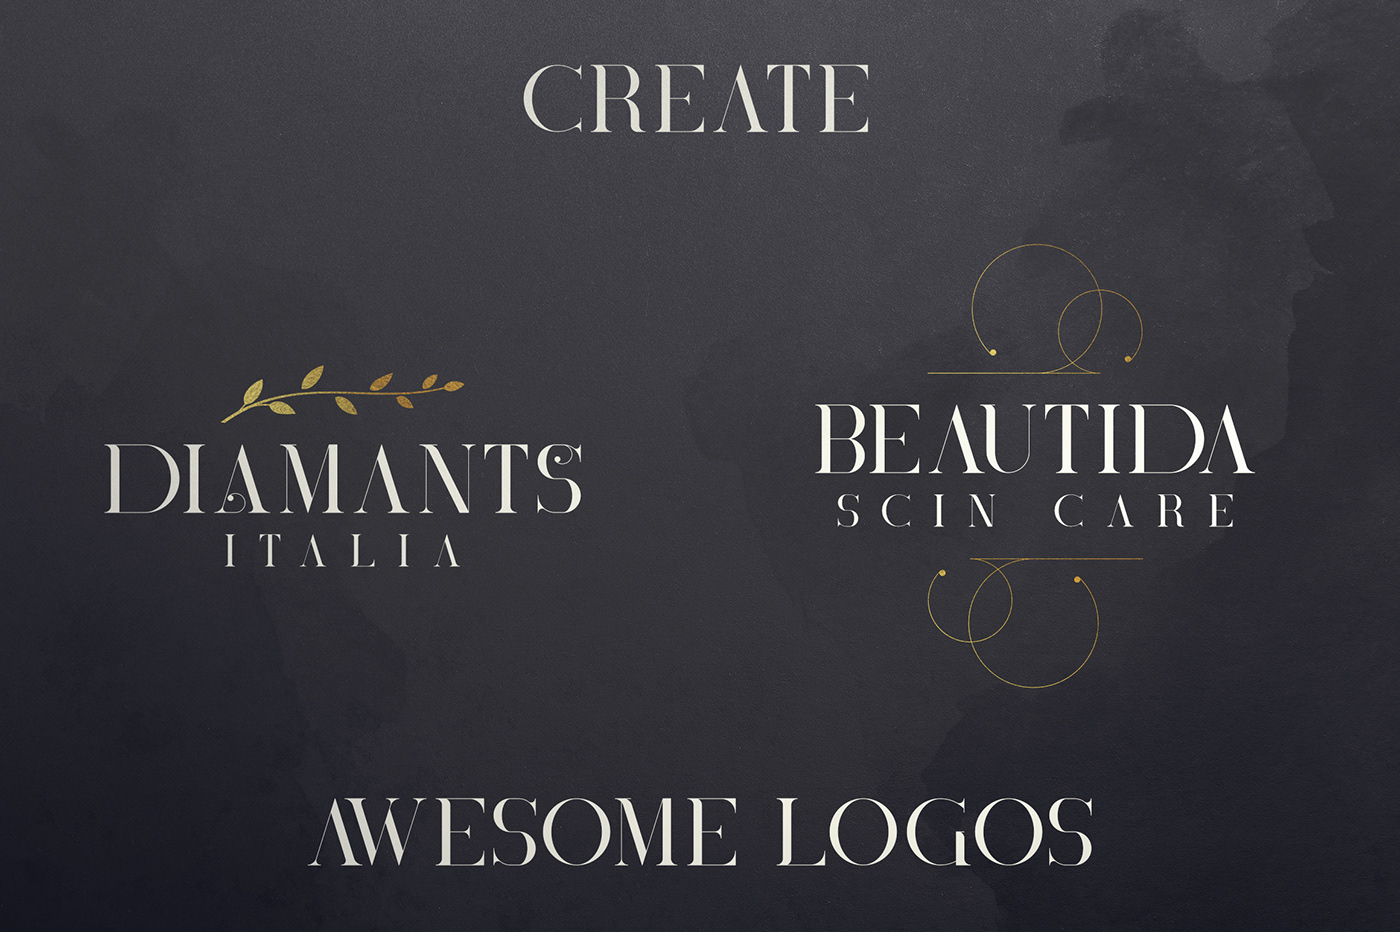 font free Feebie logo brand creator creation kit Typeface sophisticated